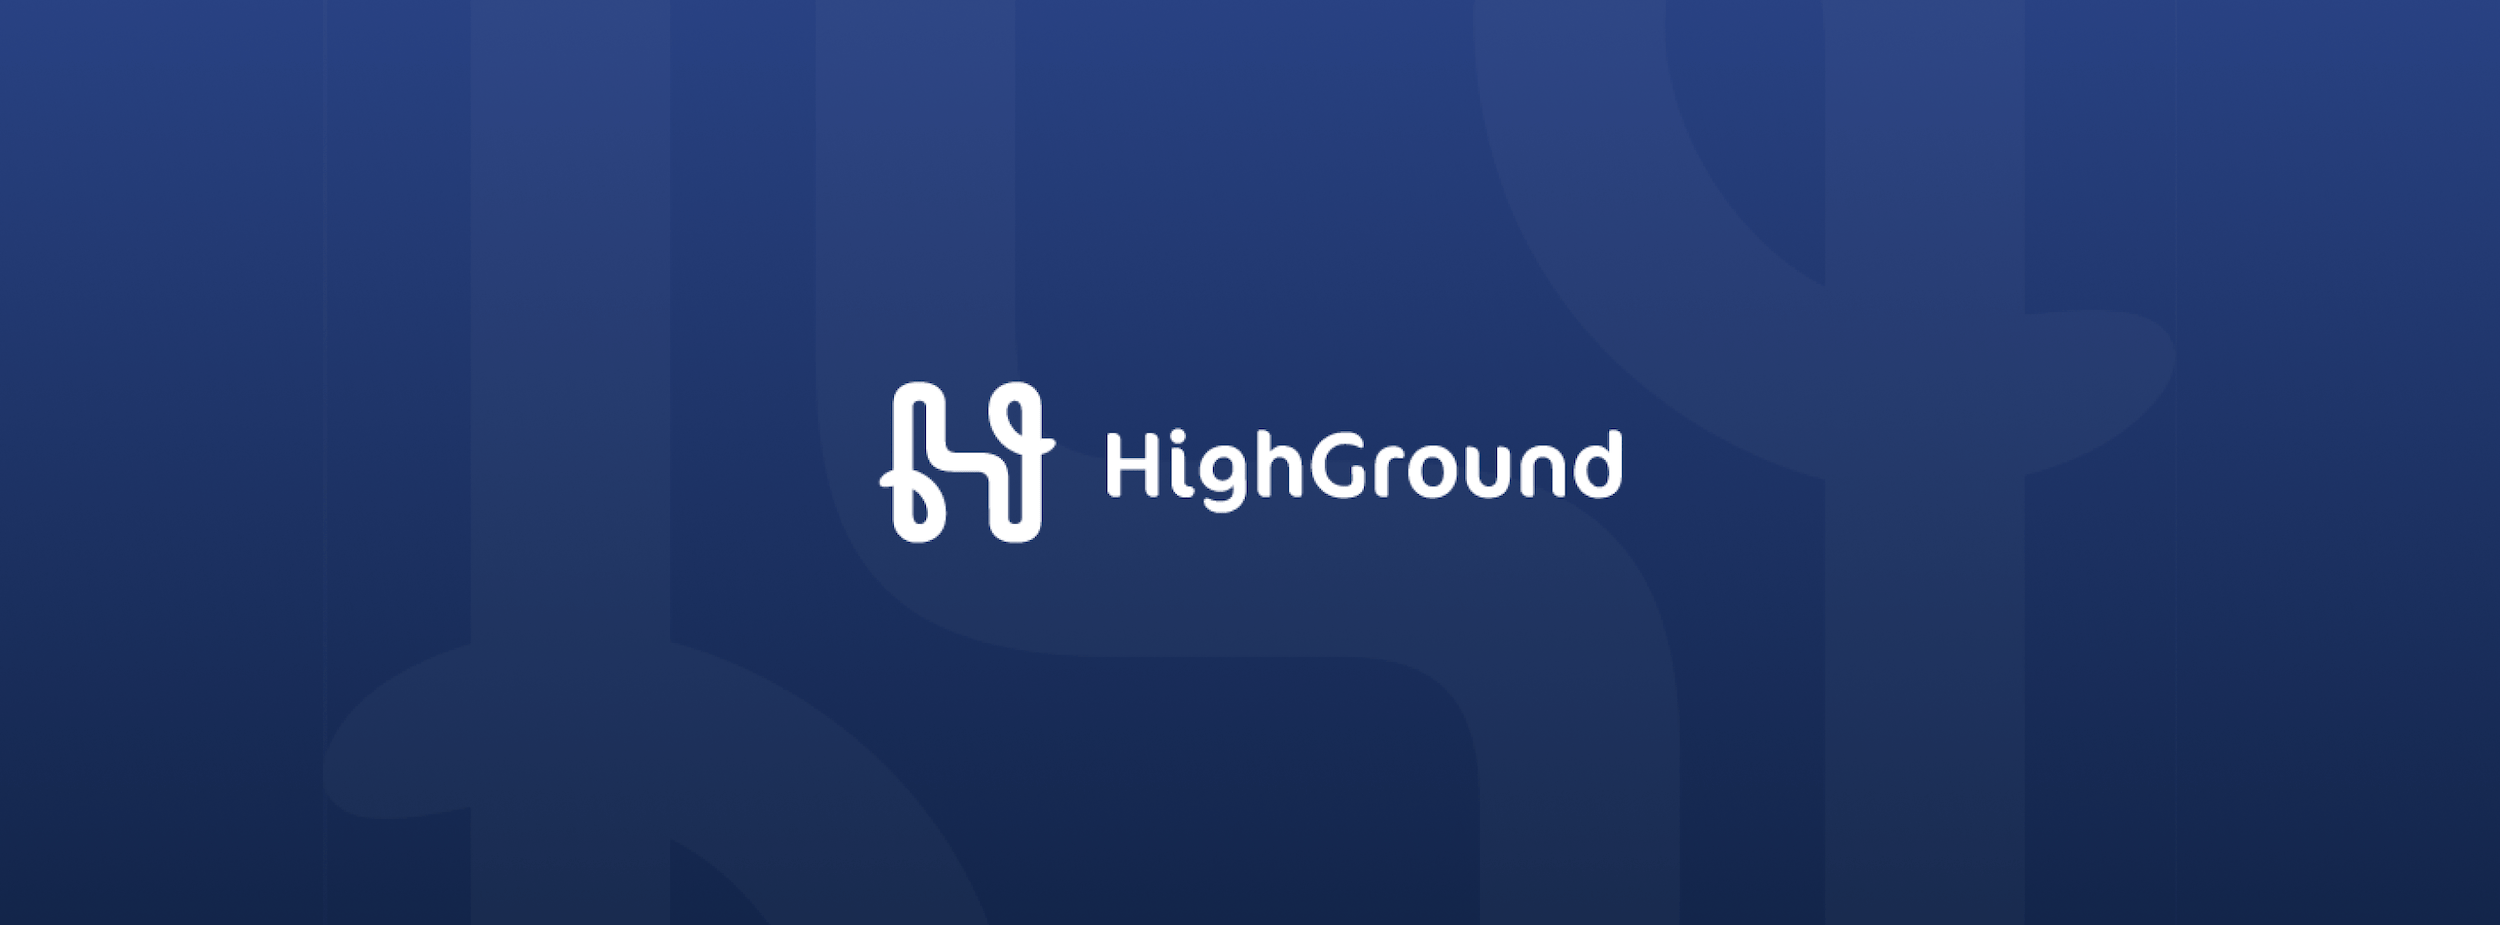 white HighGround logotype and logo against dark blue background